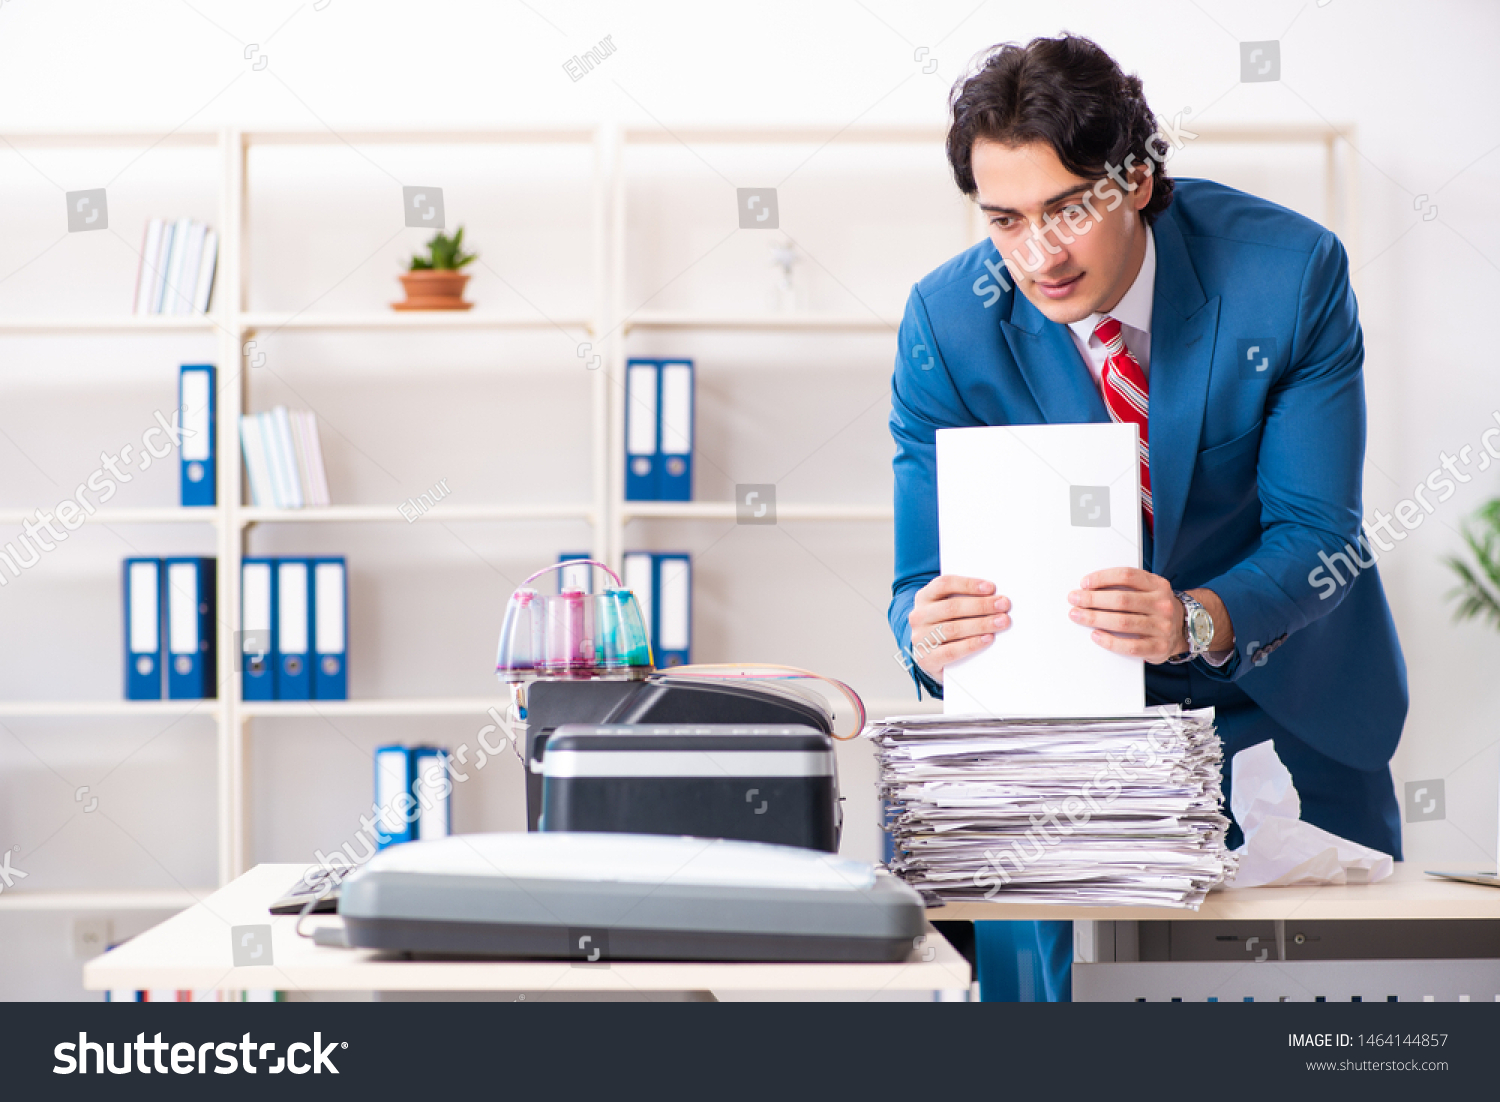 Young employee making copies at copying machine  #1464144857